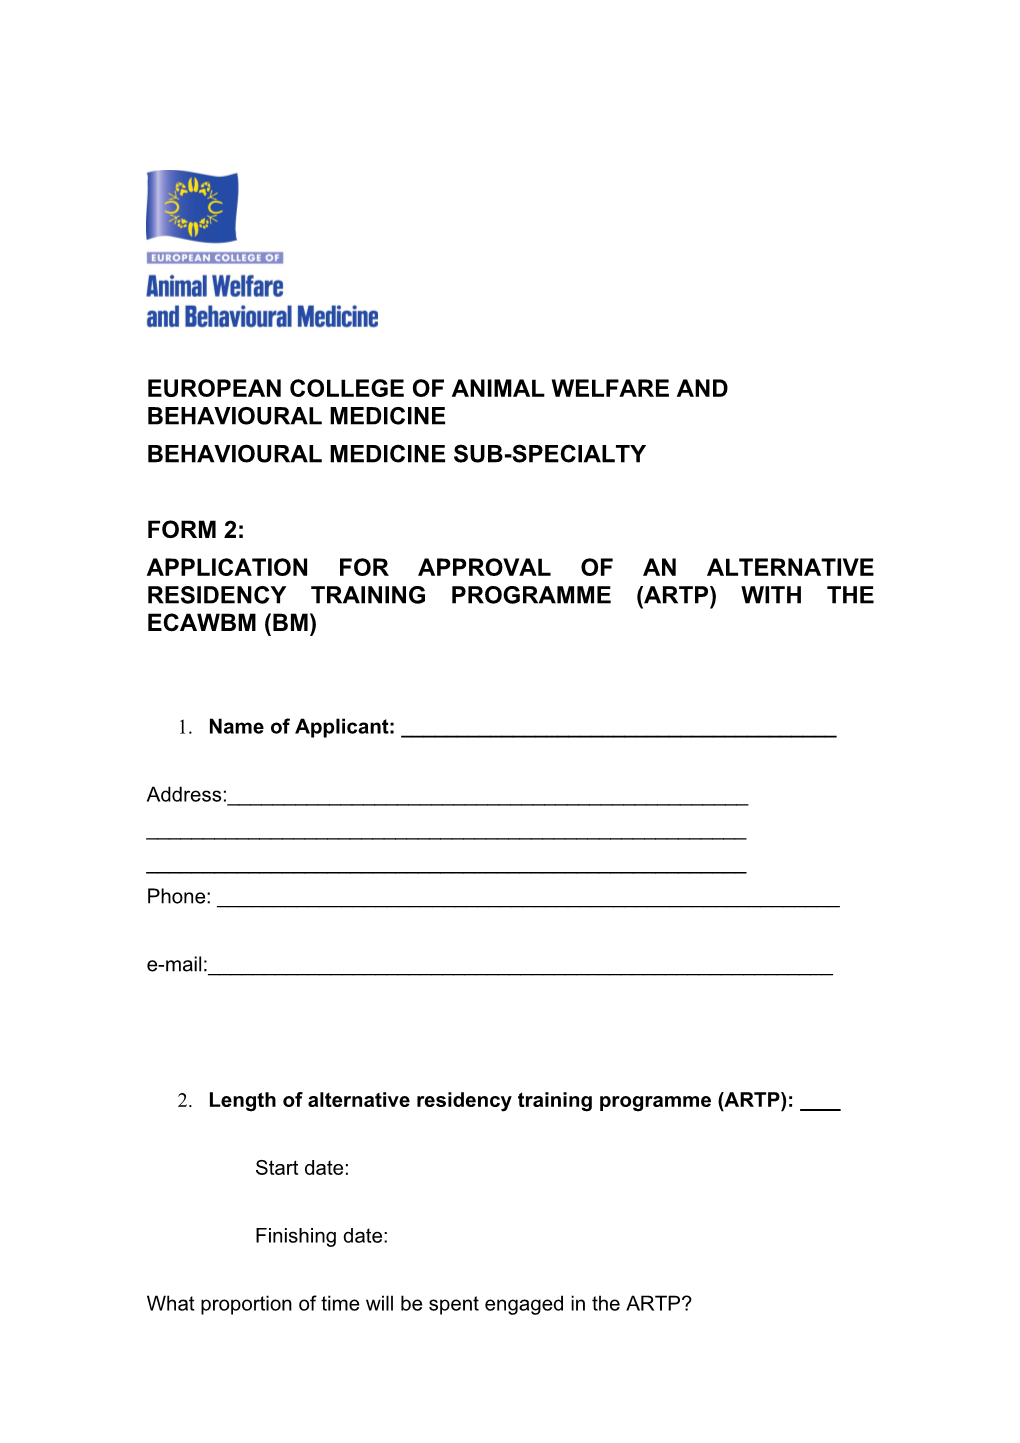 European College of Animal Welfare and Behavioural Medicine